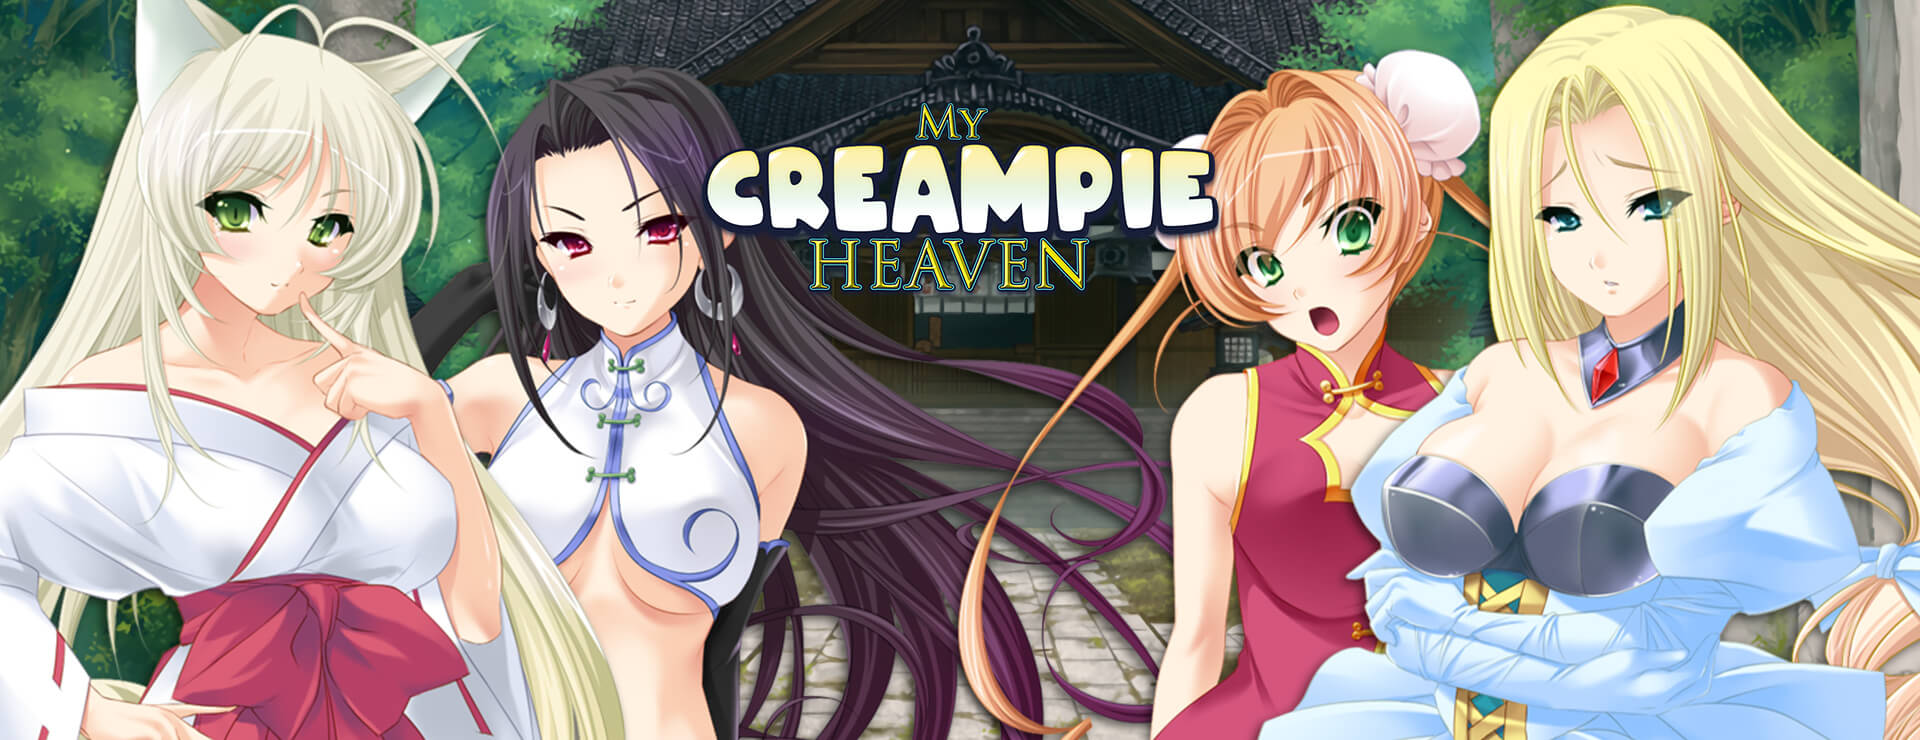 My Creampie Heaven - Roman Visuel Jeu